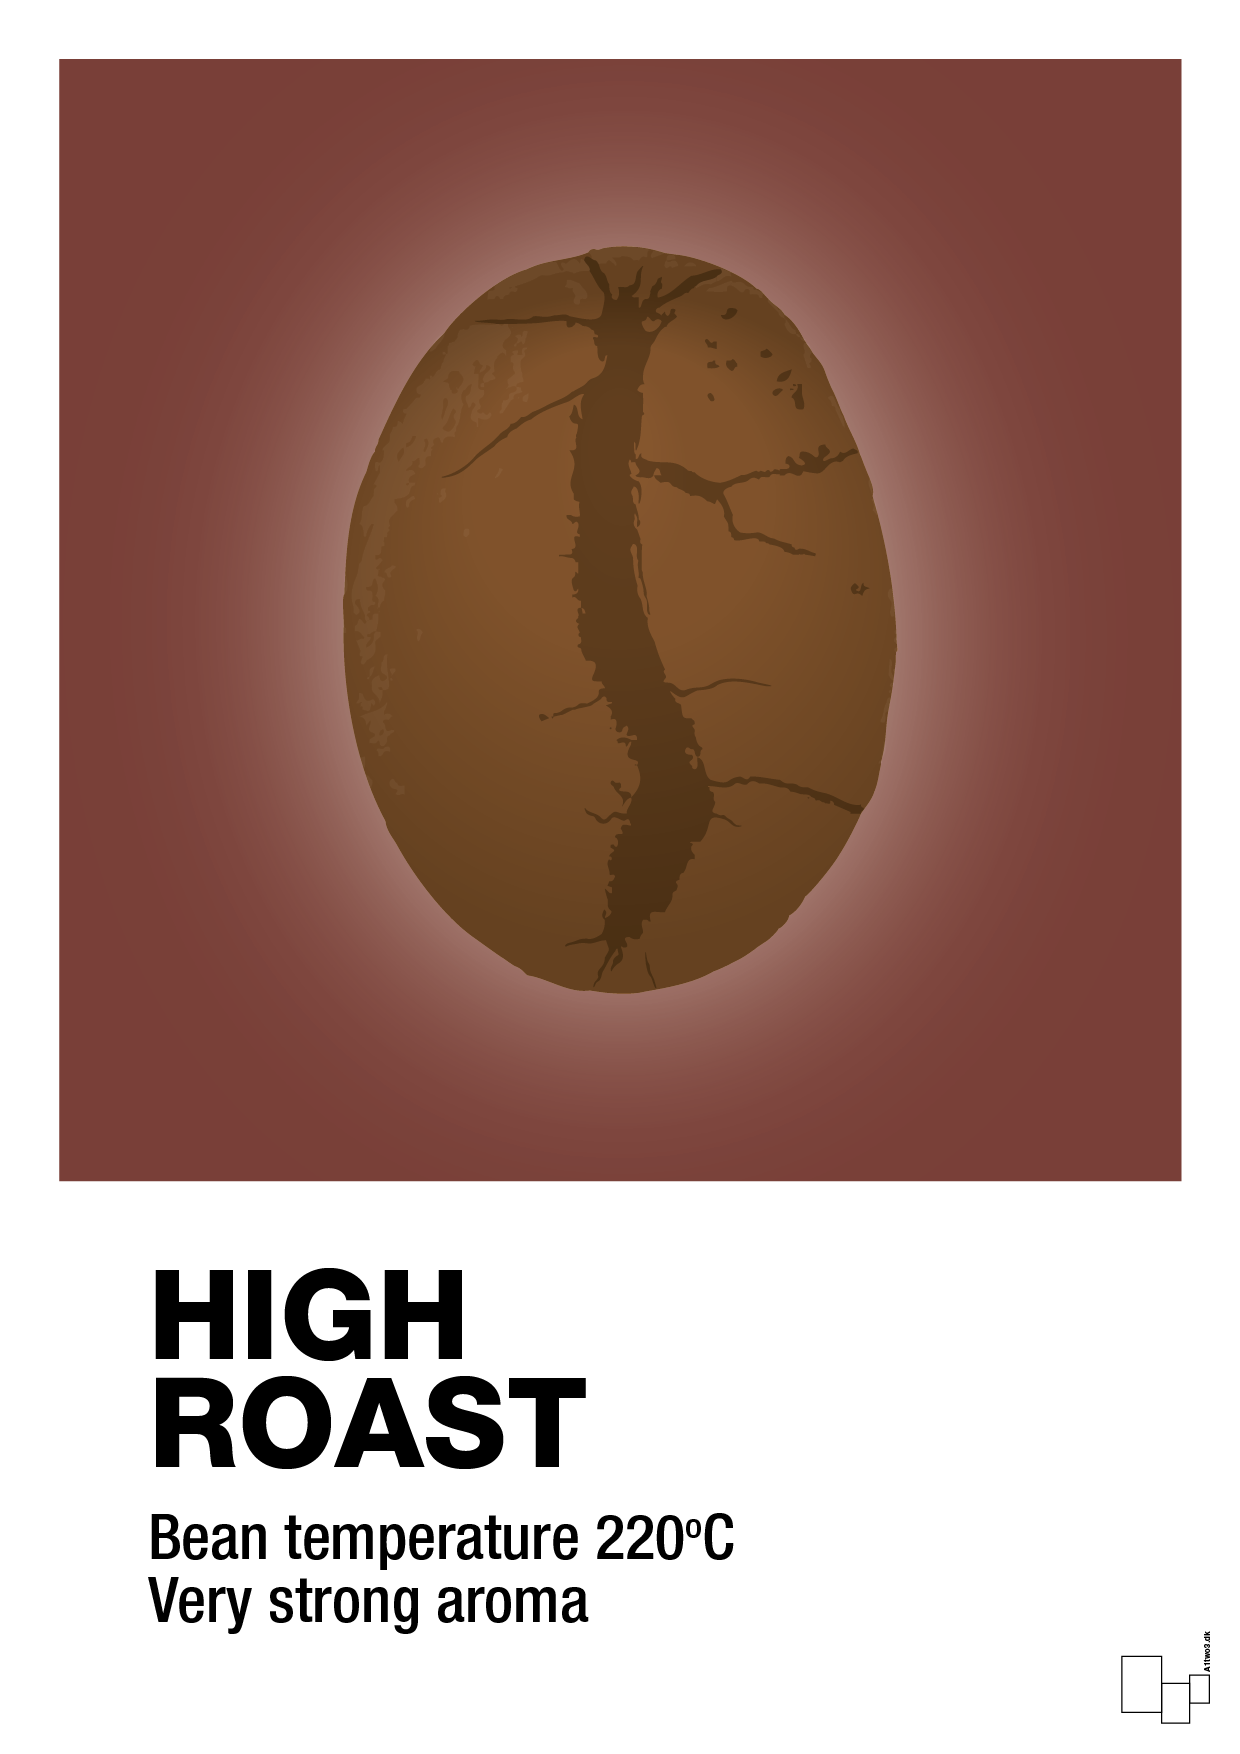 high roast - Plakat med Mad & Drikke i Red Pepper